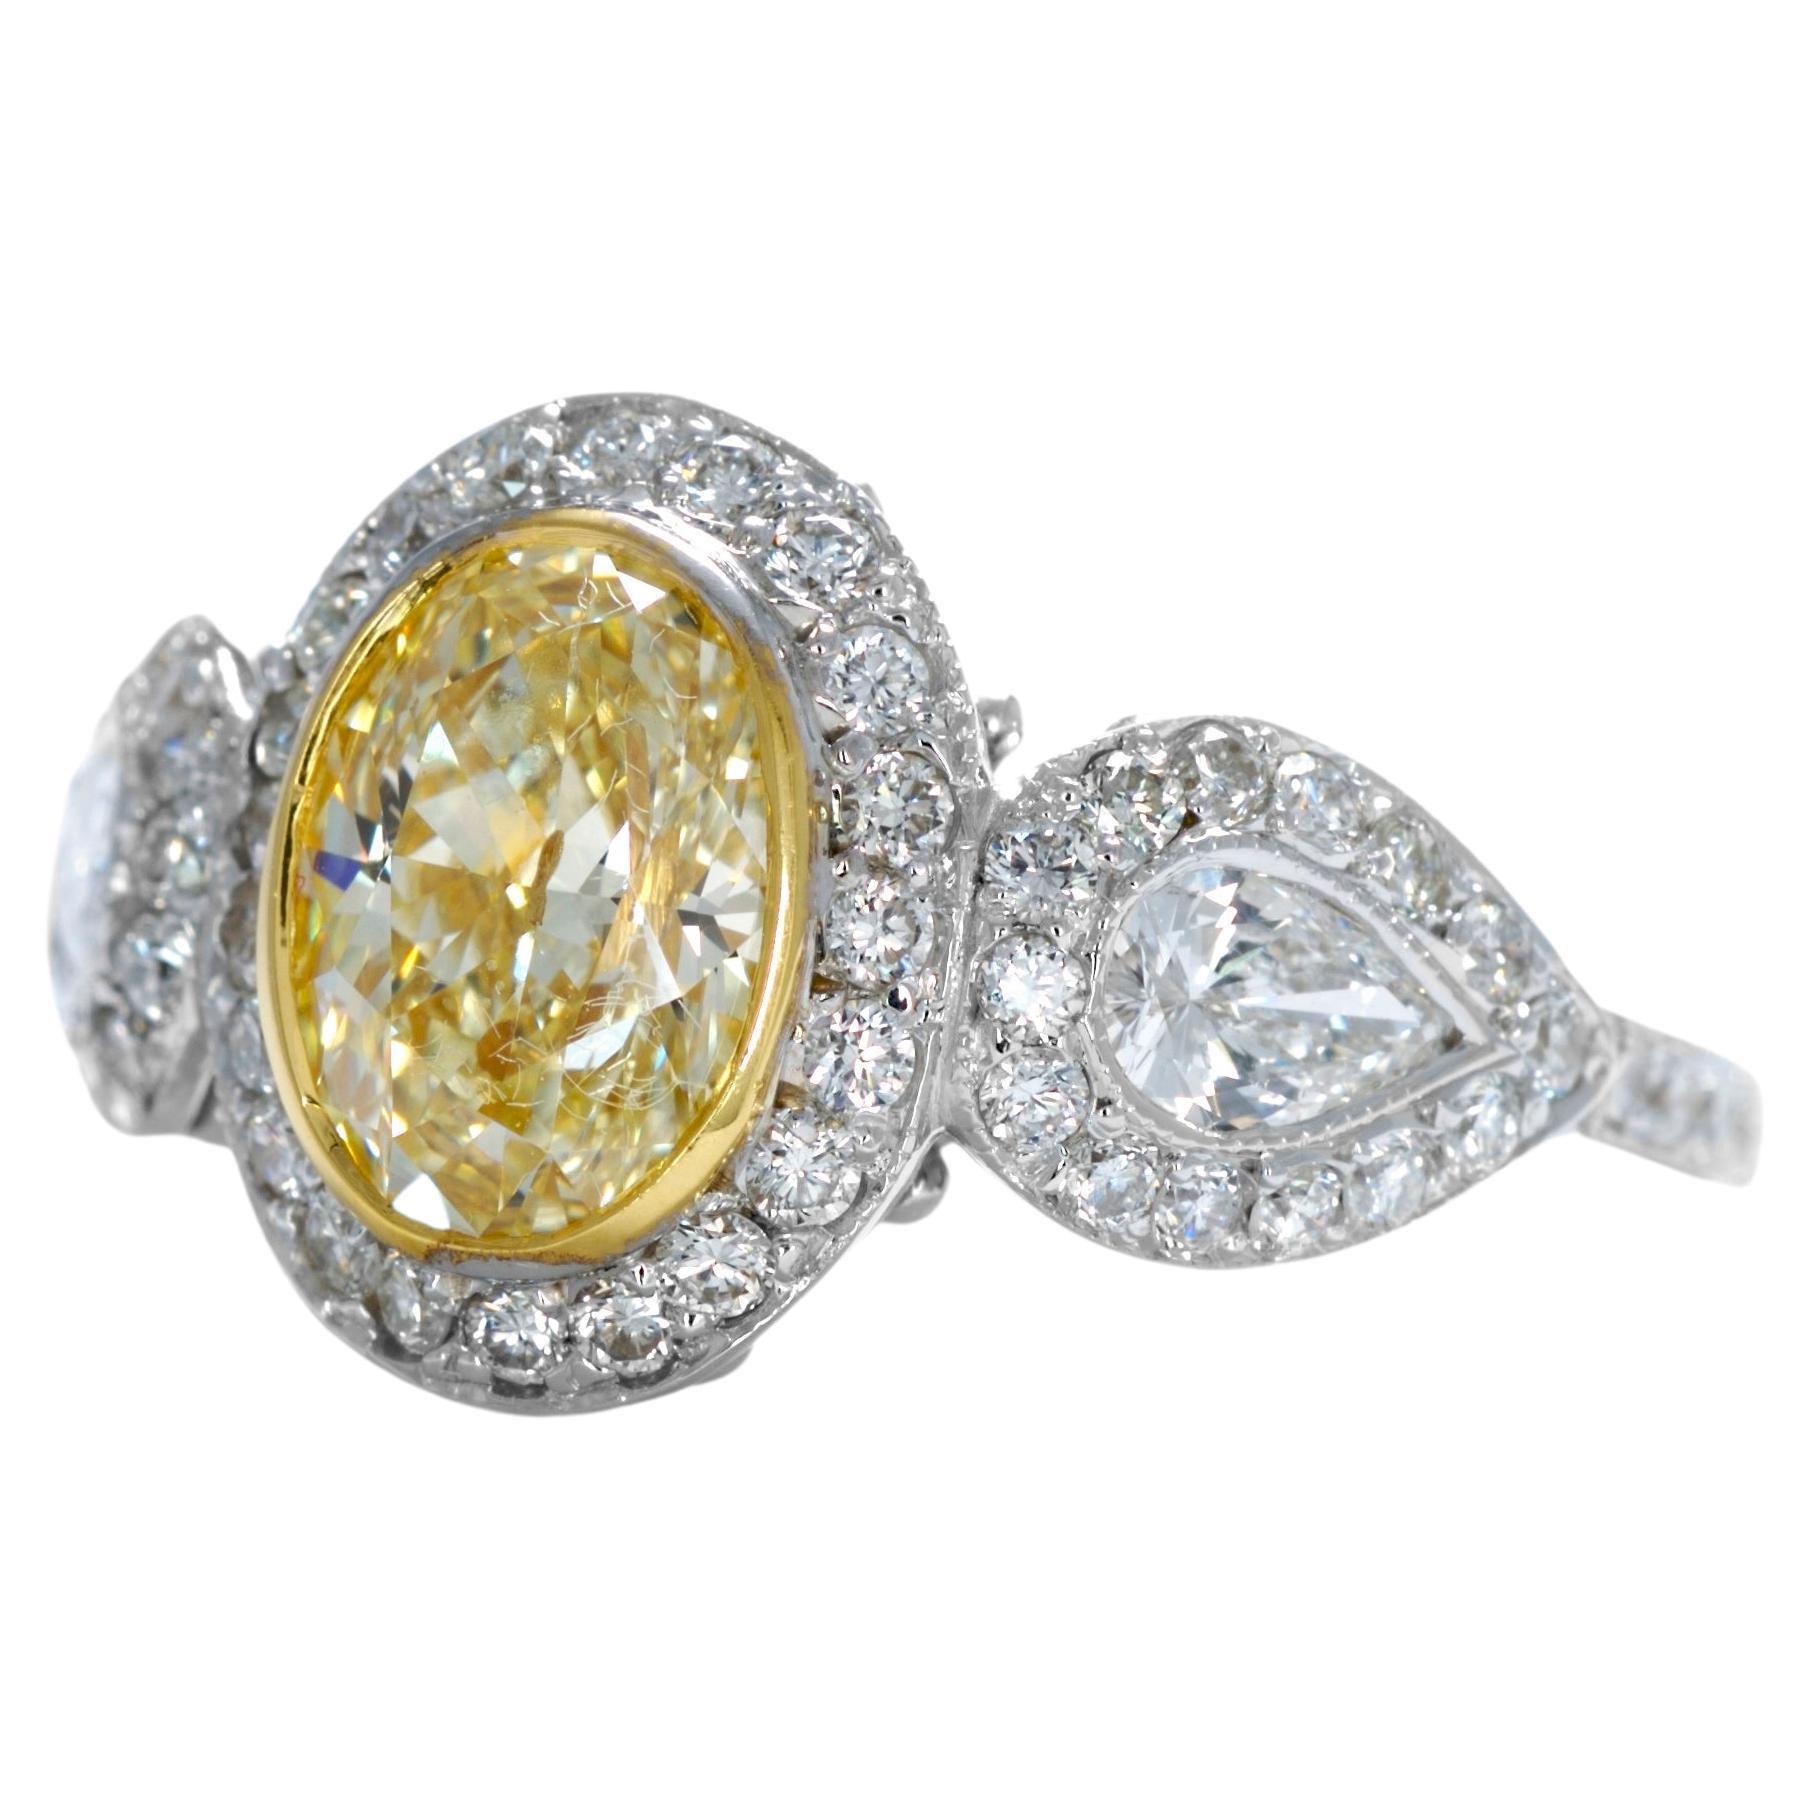 1.01 Carat Fancy Yellow Oval Cut Diamond Engagement Ring